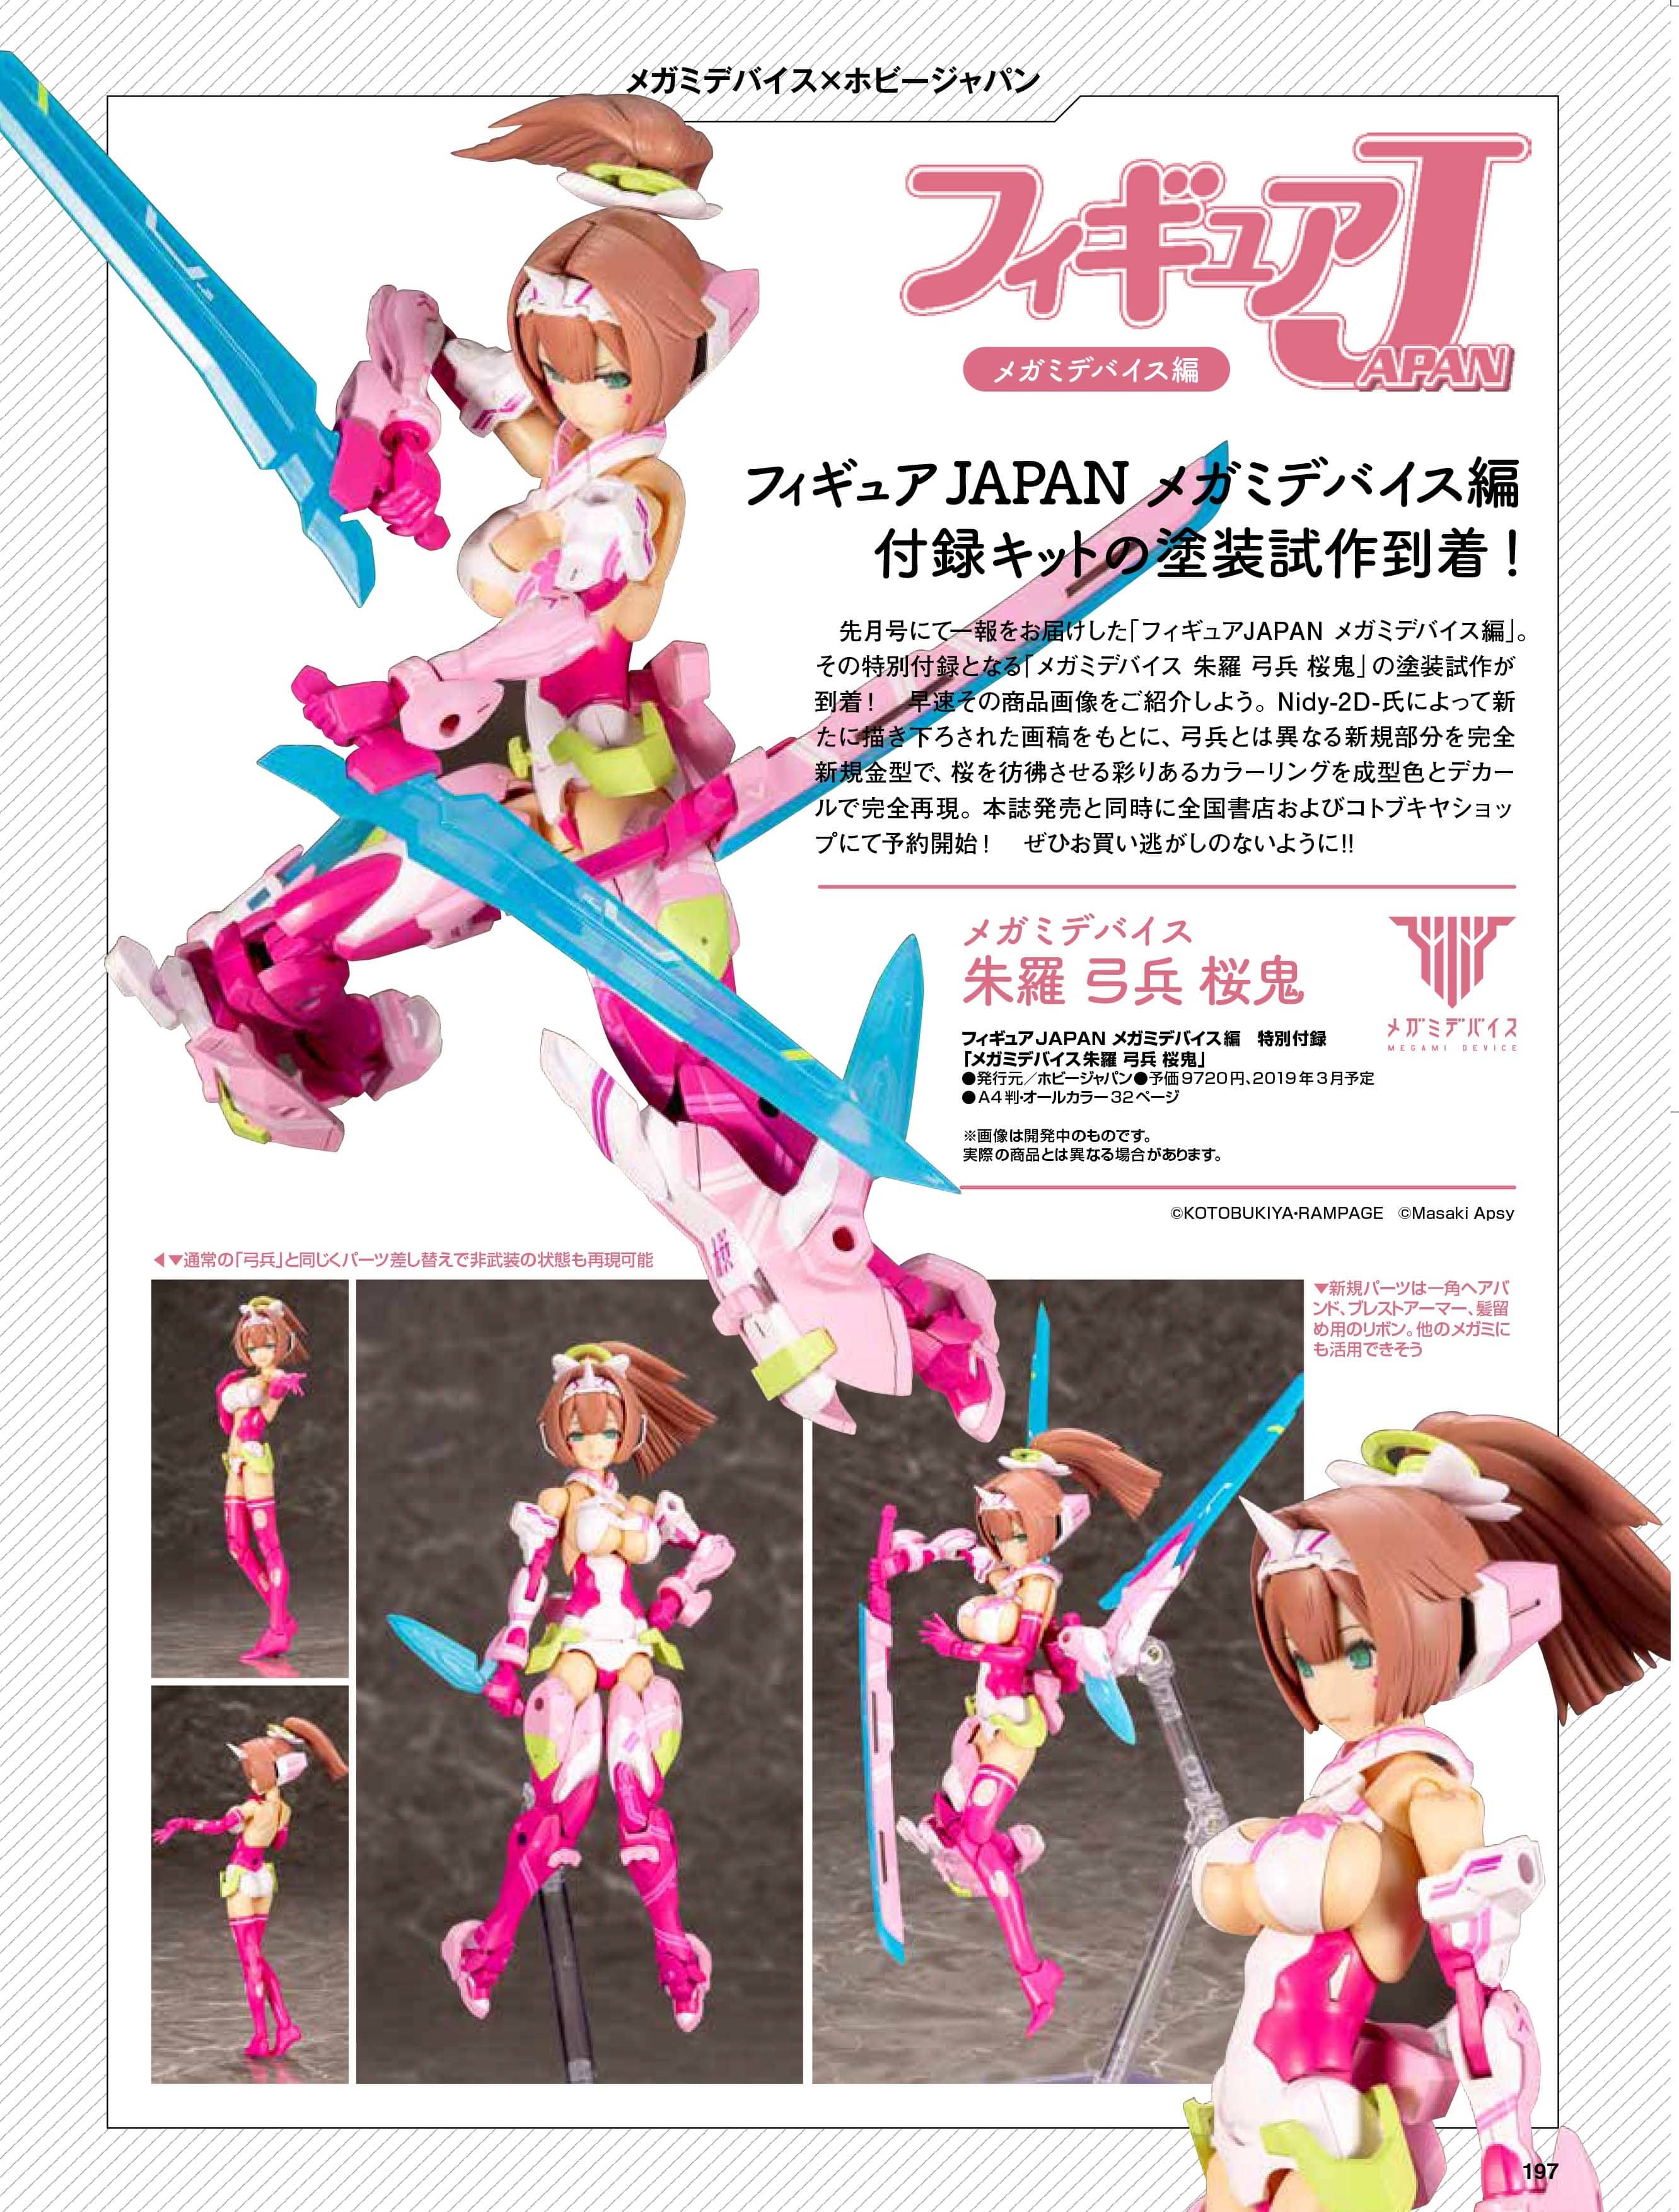 kotobukiya / Figure JAPAN雜誌 Vol.6 / Megami Device / 女神裝置 / 附特典人形